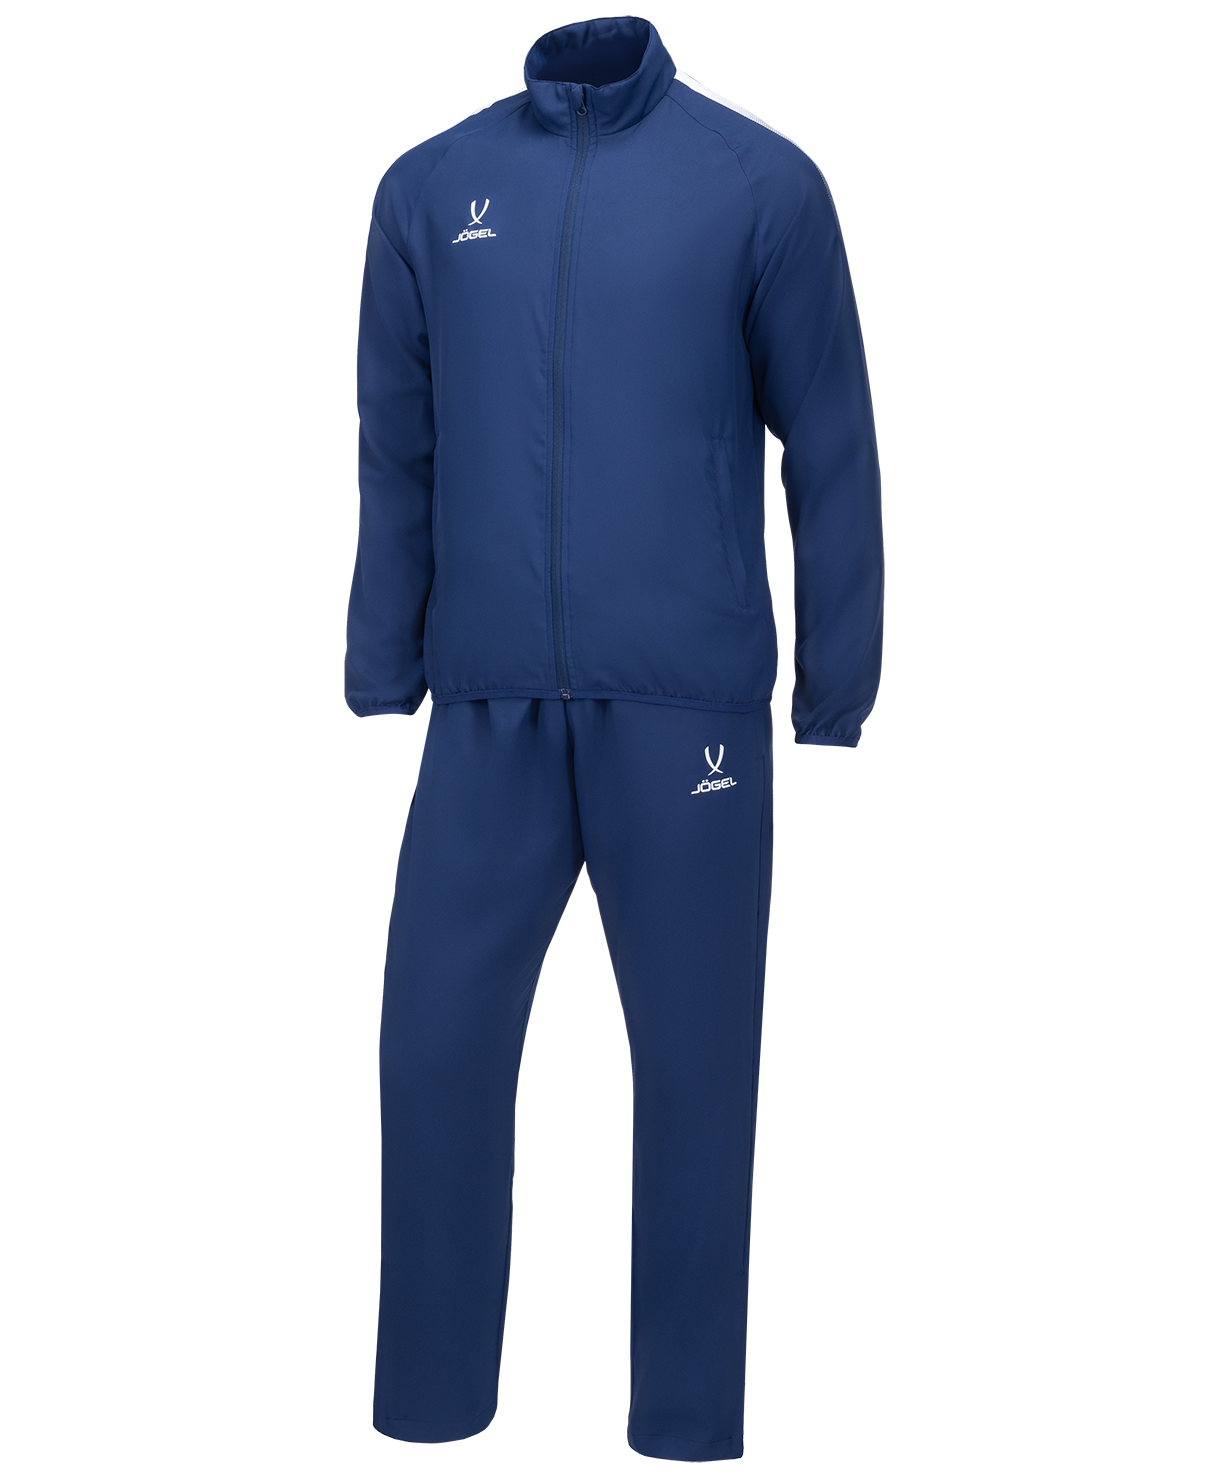 Костюм спортивный Jogel Camp Lined Suit, темно-синий/темно-синий, детский (XS) костюм спортивный jogel camp lined suit синий темно синий